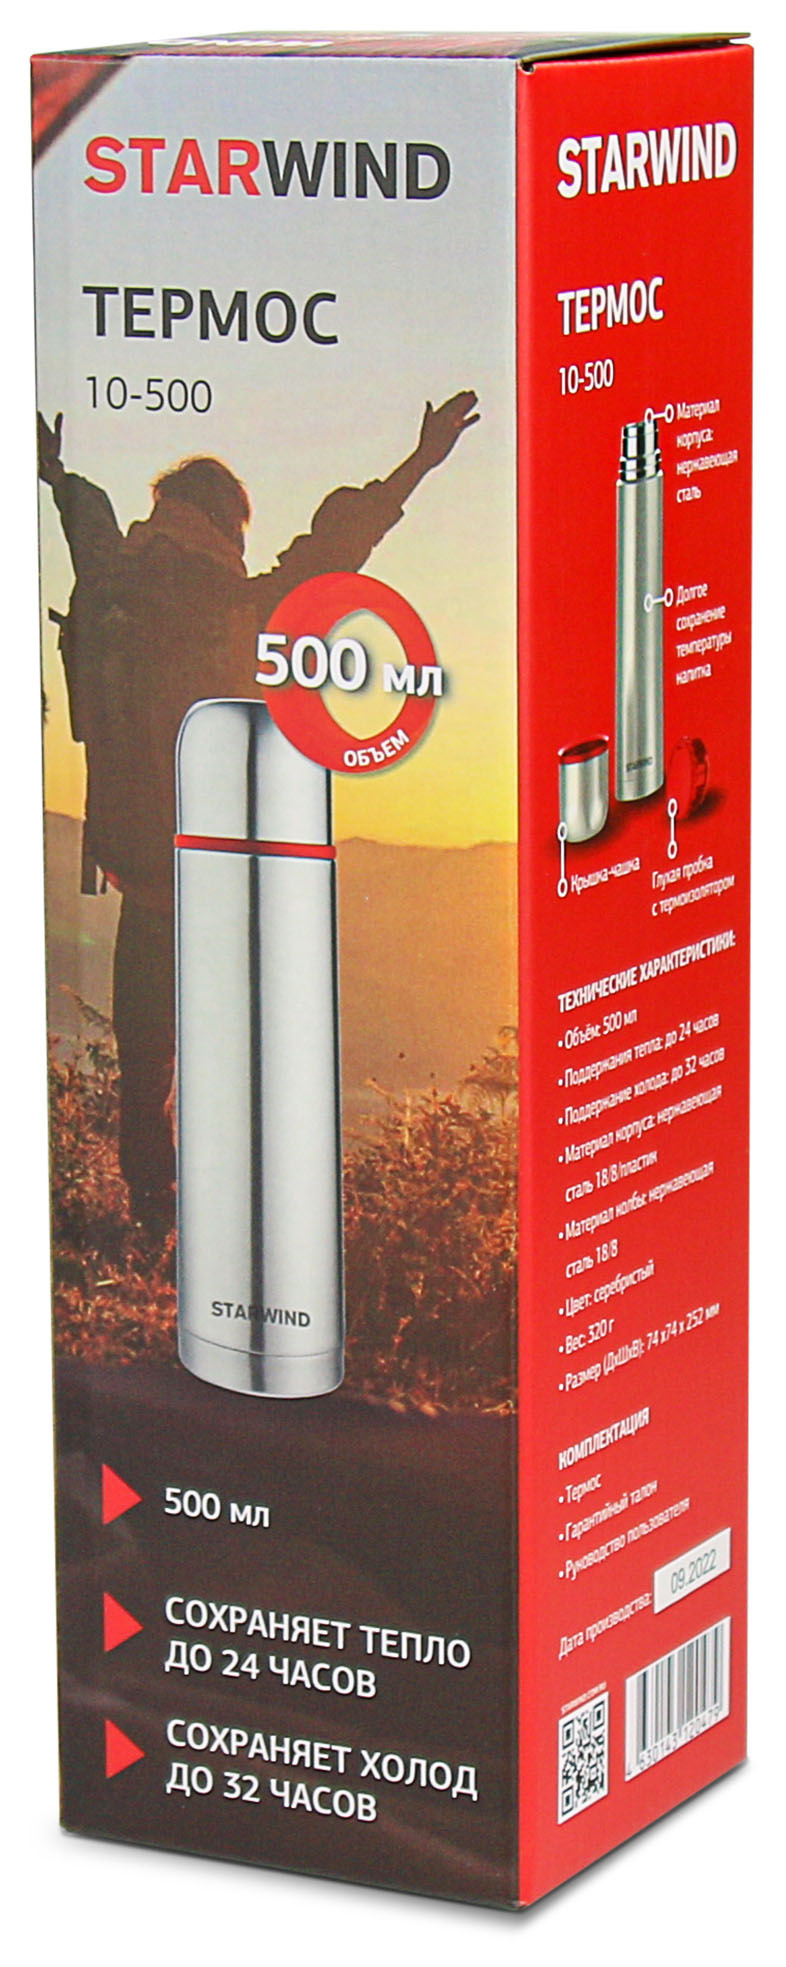 Термос Starwind 10-500, 0.5л, серебристый/красный от магазина Старвинд